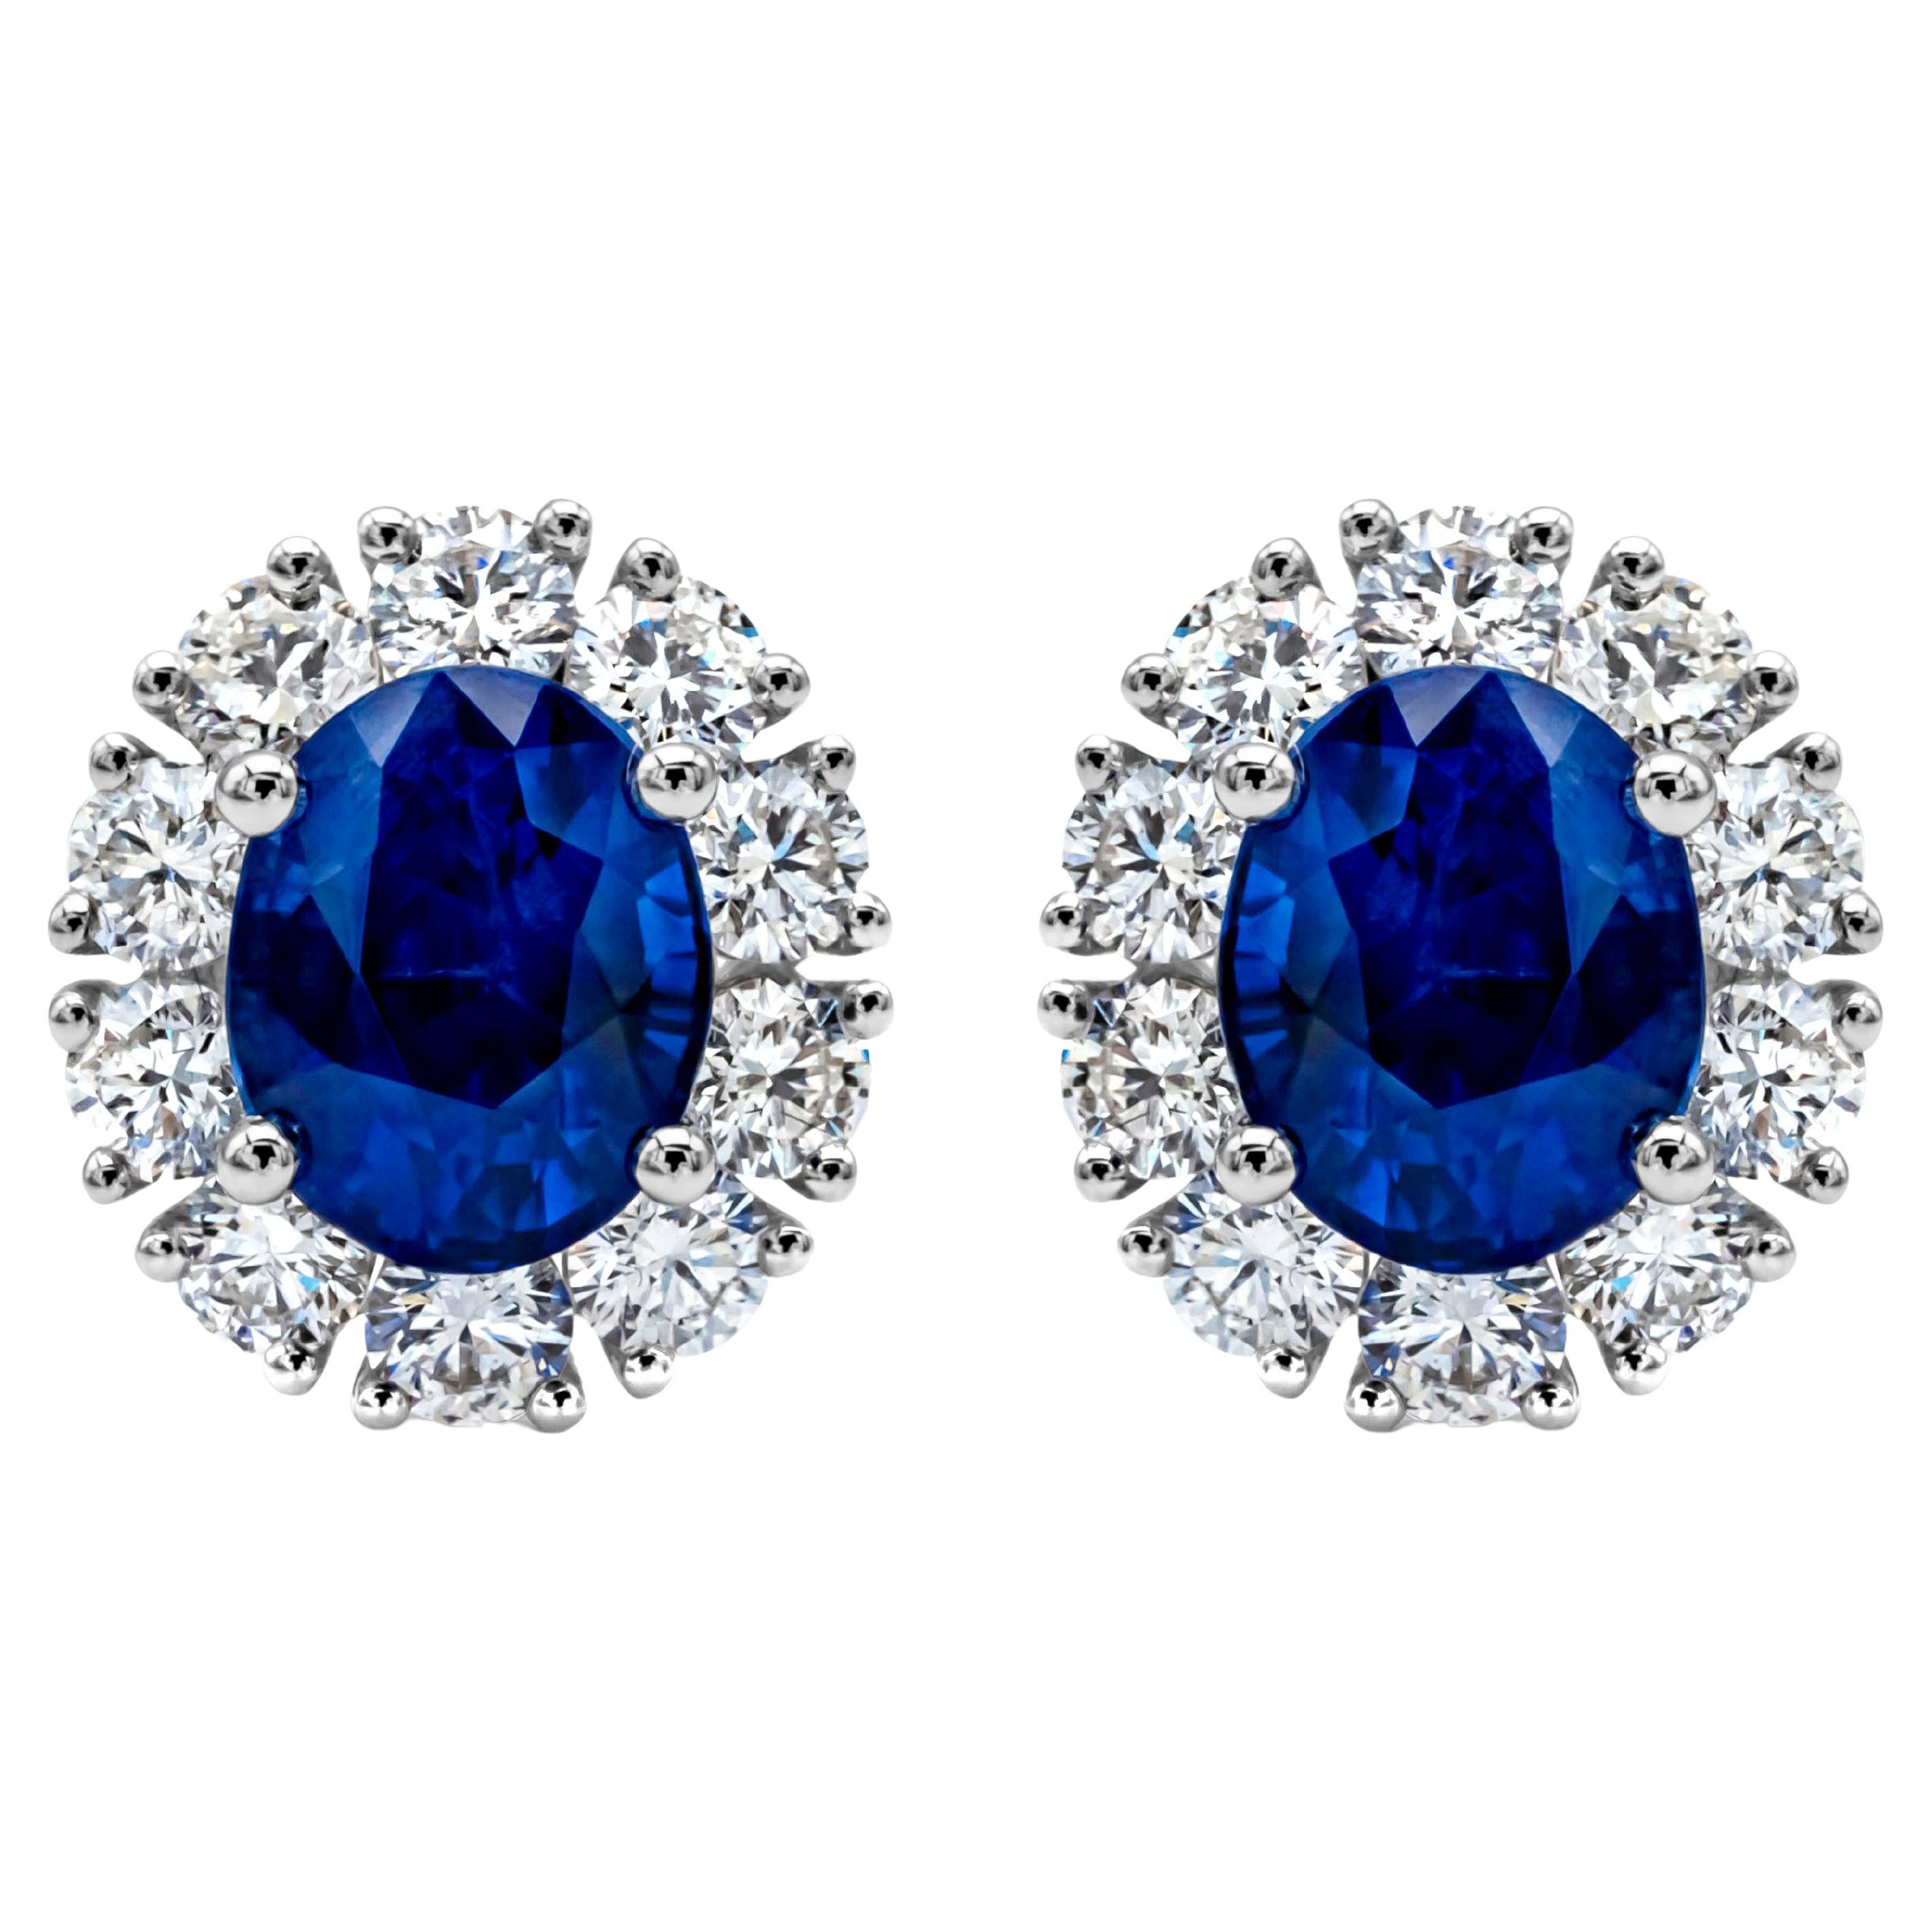 Roman Malakov 2.29 Carats Total Oval Cut Blue Sapphire & Diamond Stud Earrings For Sale